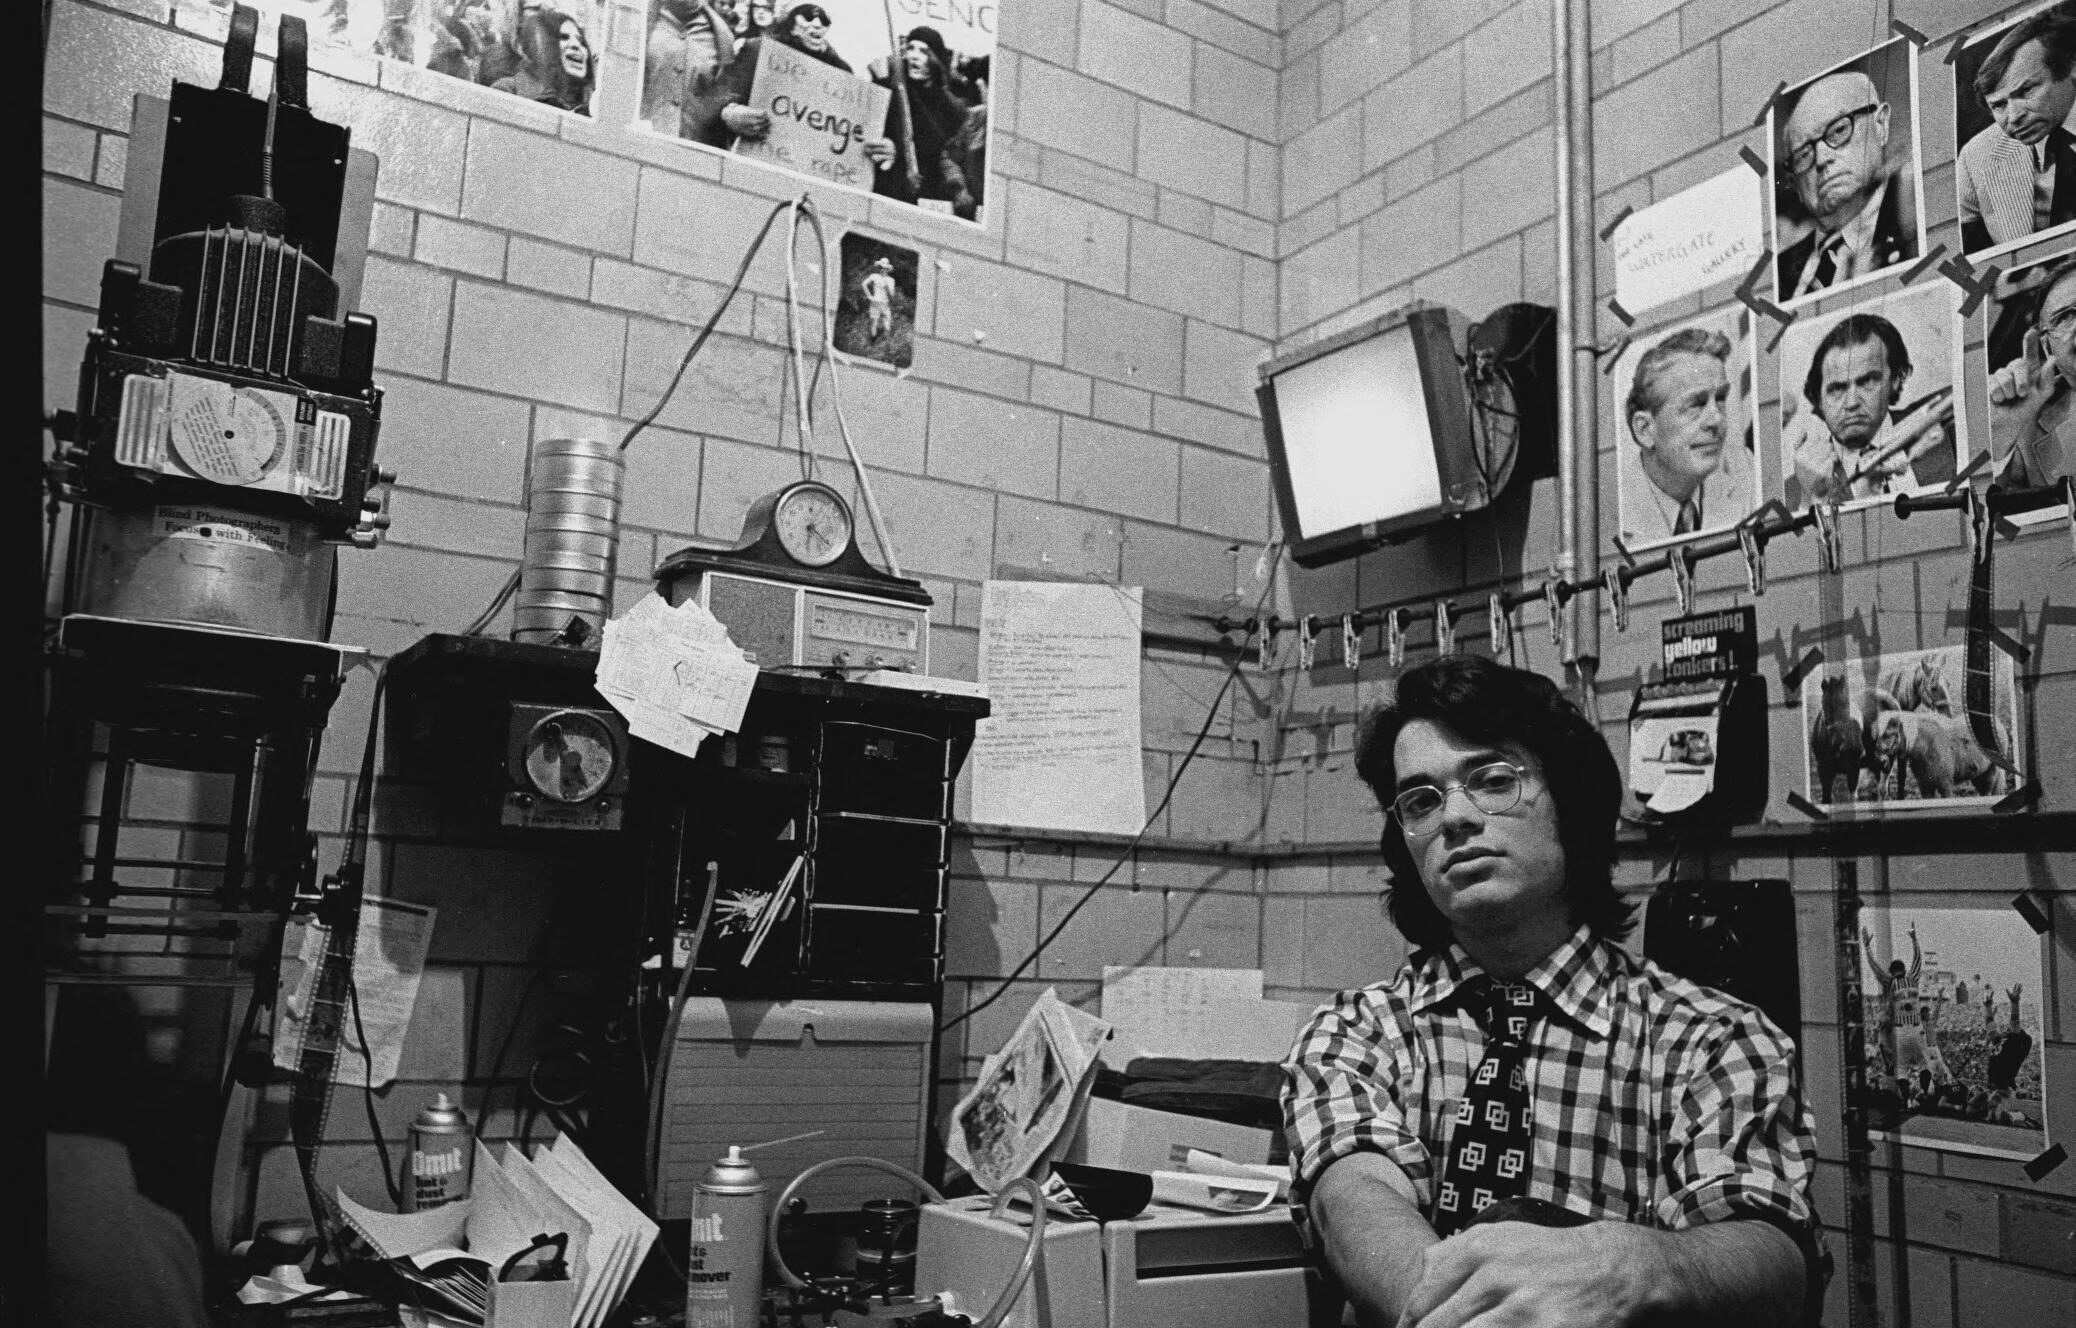 Michigan Daily Chief Photographer, David Margolick in the darkroom, 1975 or 1976. Copyright S. Kagan.